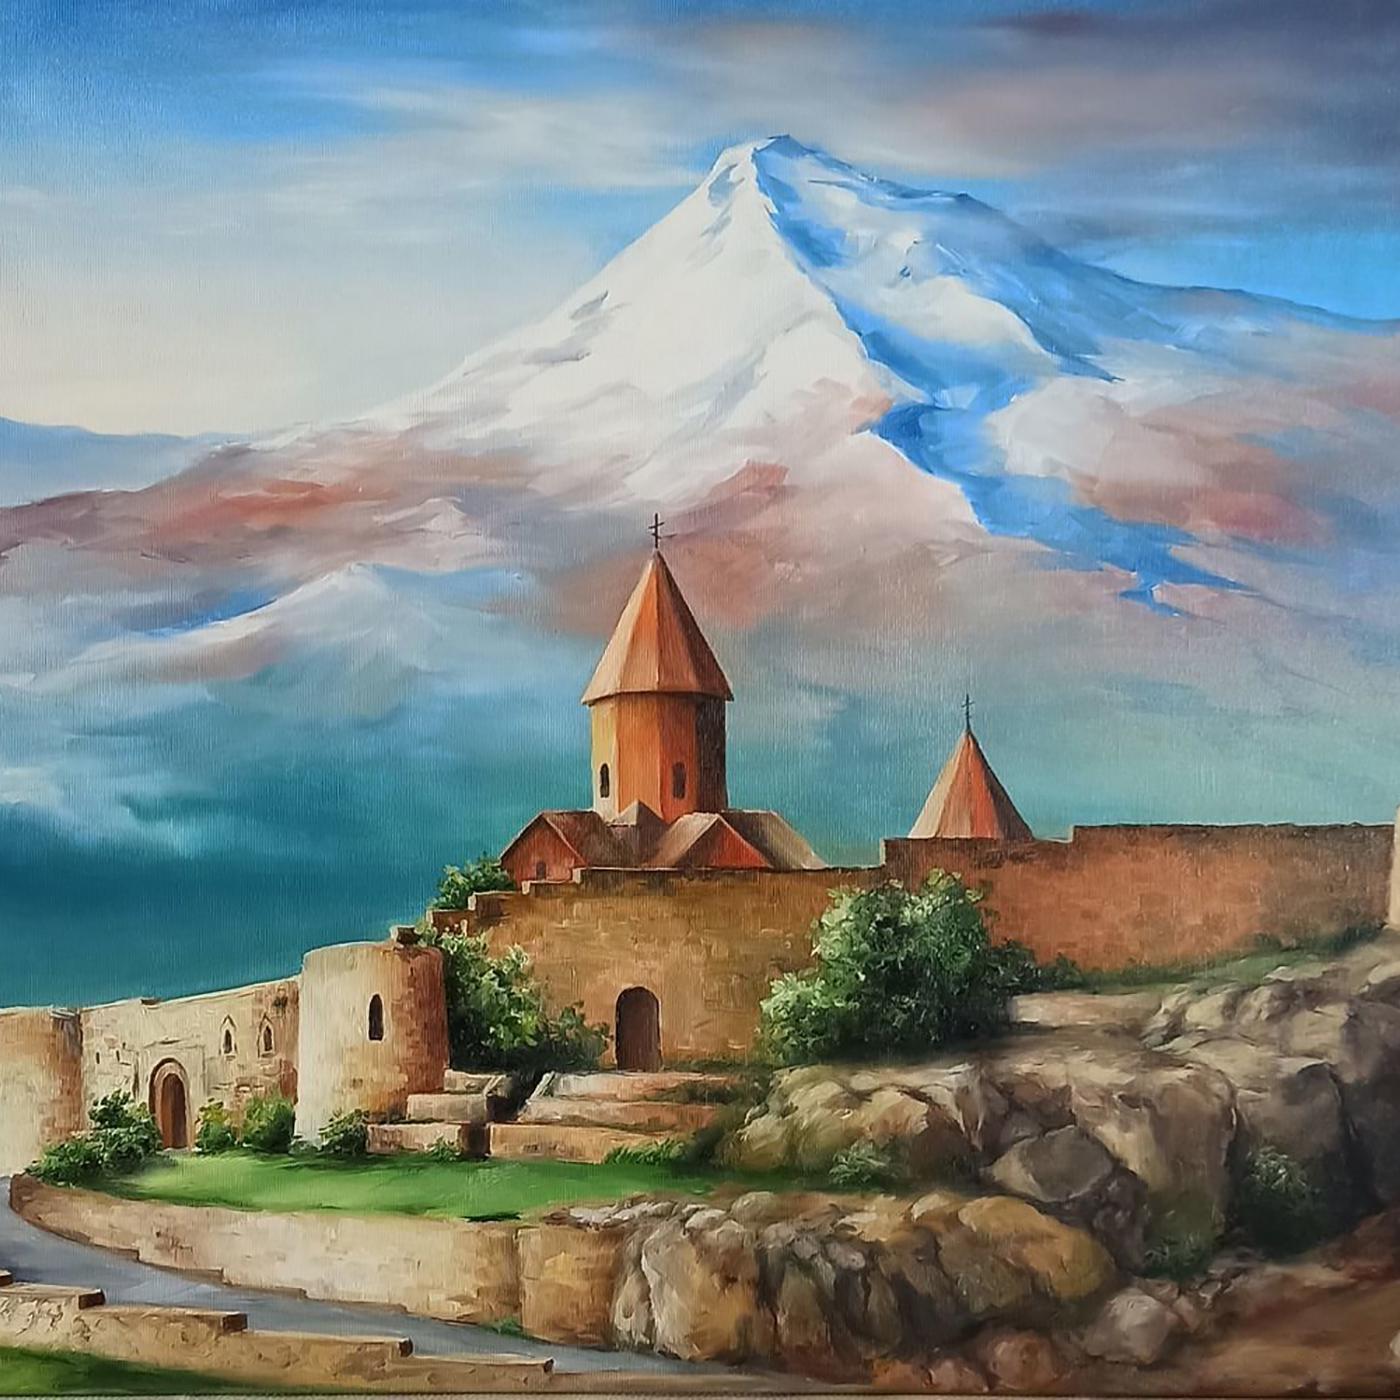 Постер альбома Армения